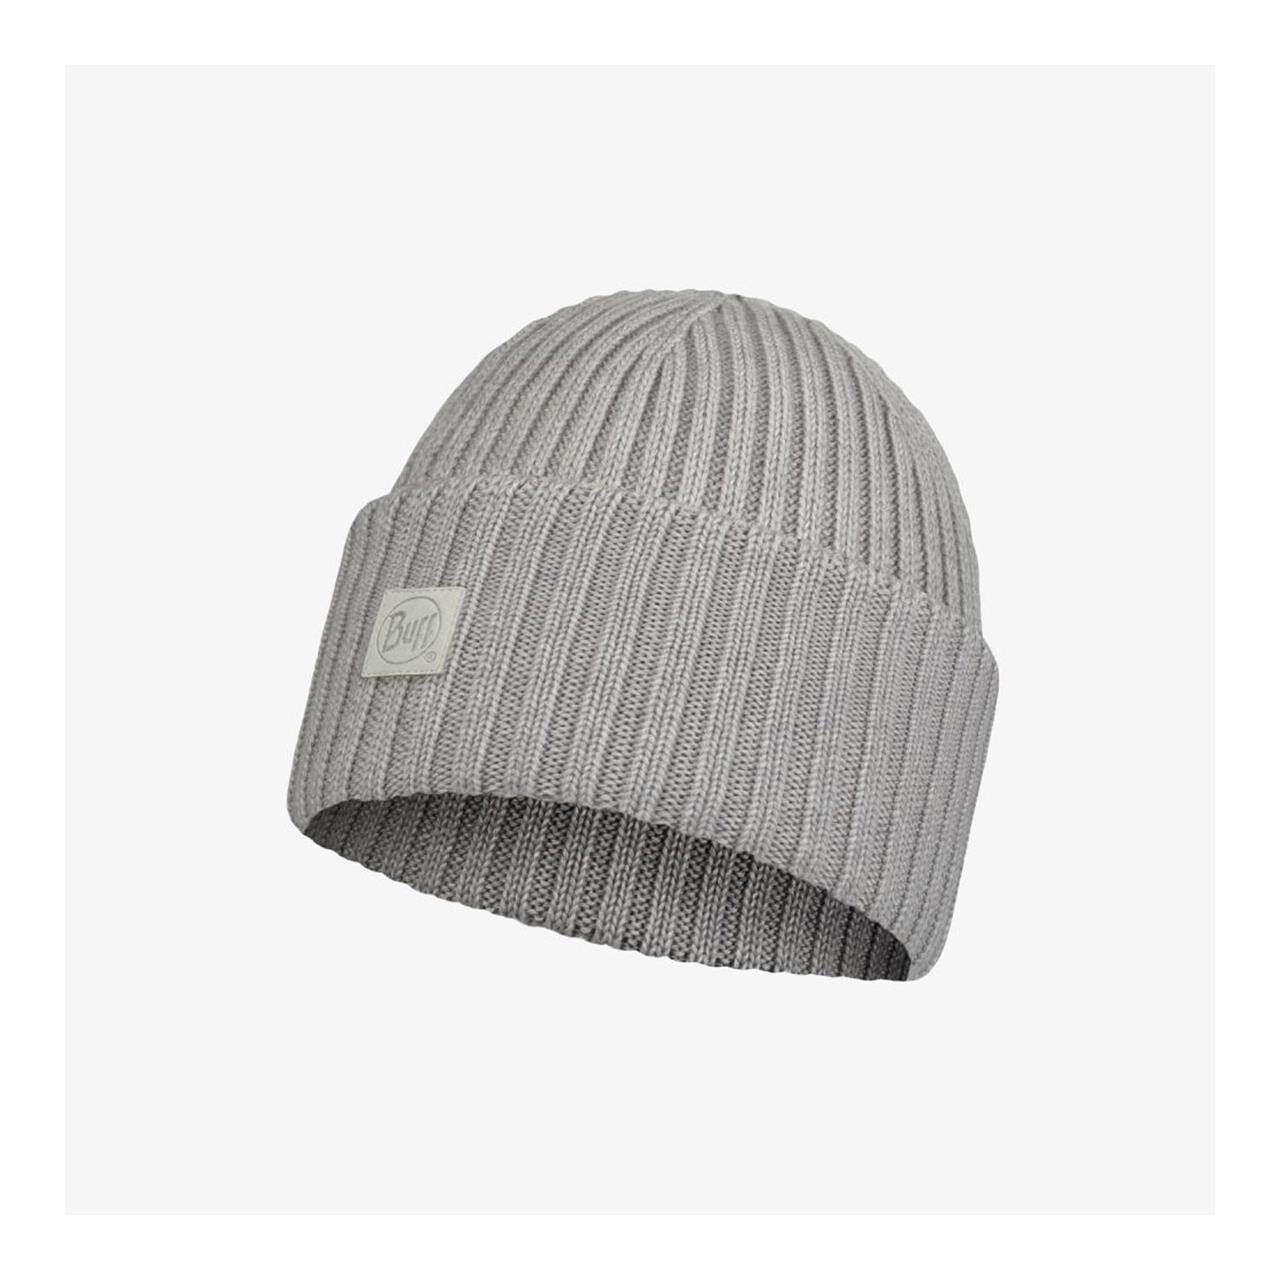 Buff Knitted Hat Ervin 2021 model (Grå (ERVIN LIGHT GREY) One size)